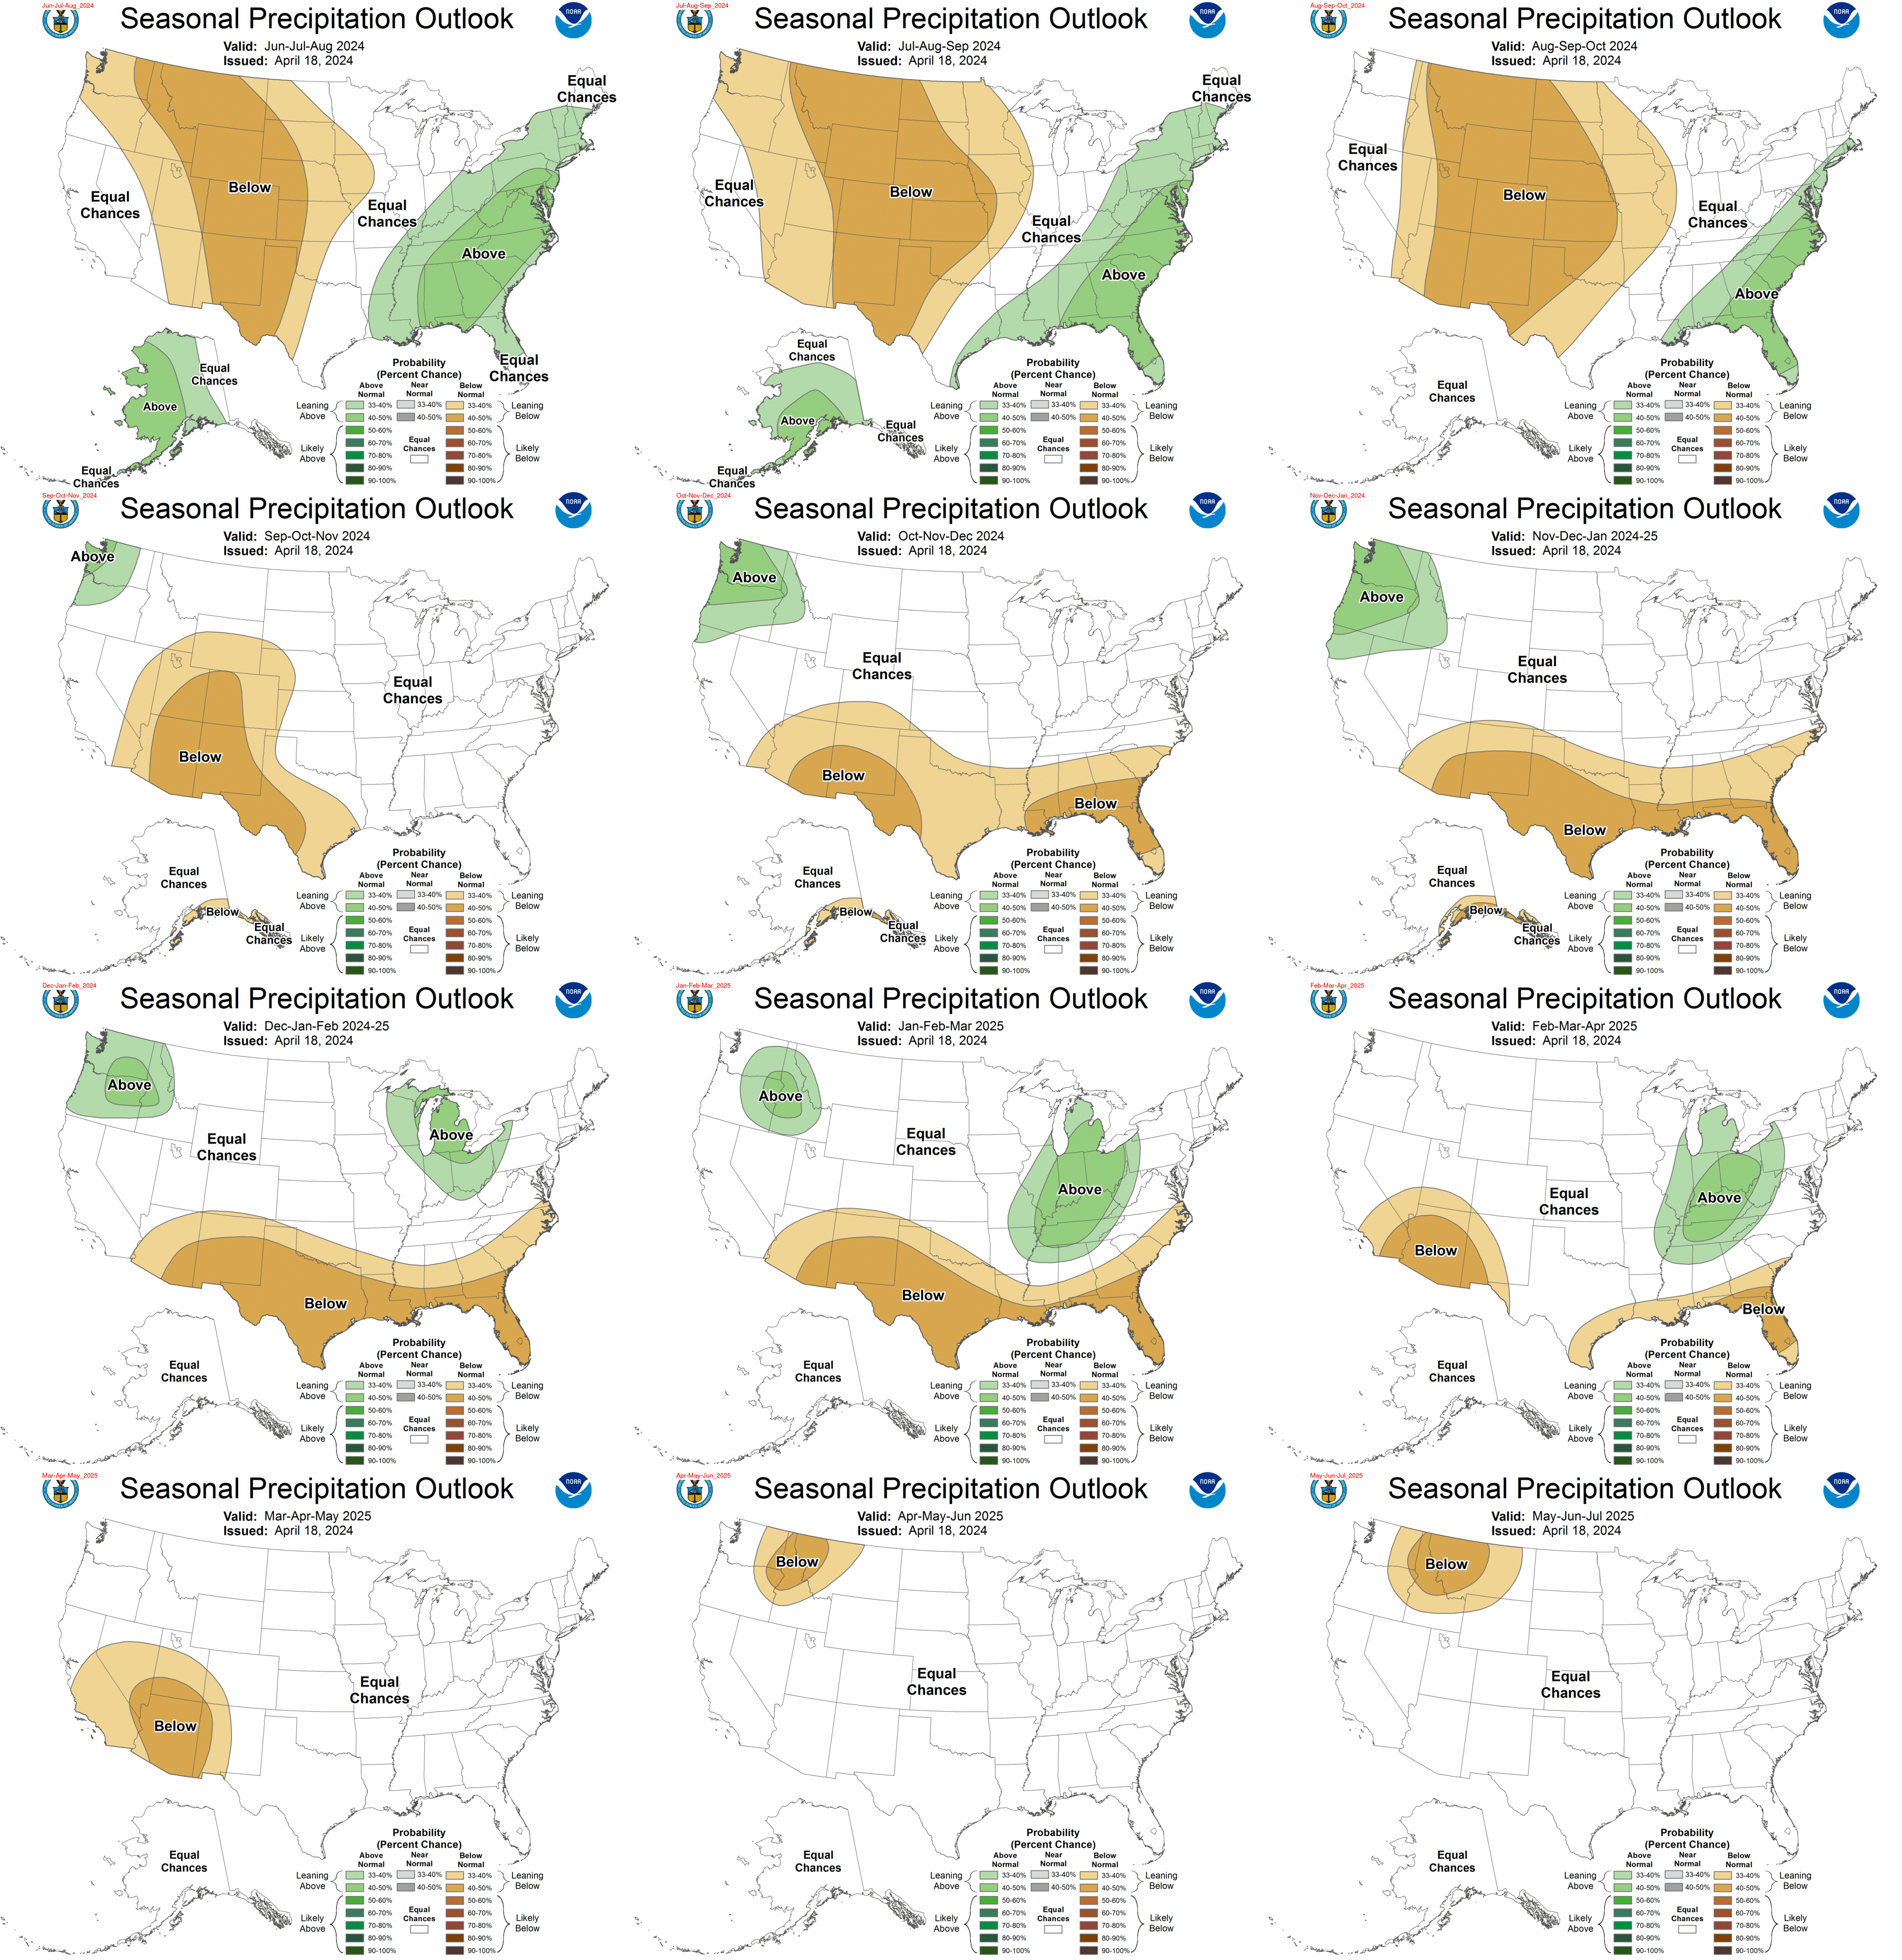 Updated Seasonal Precipitation Outlook 